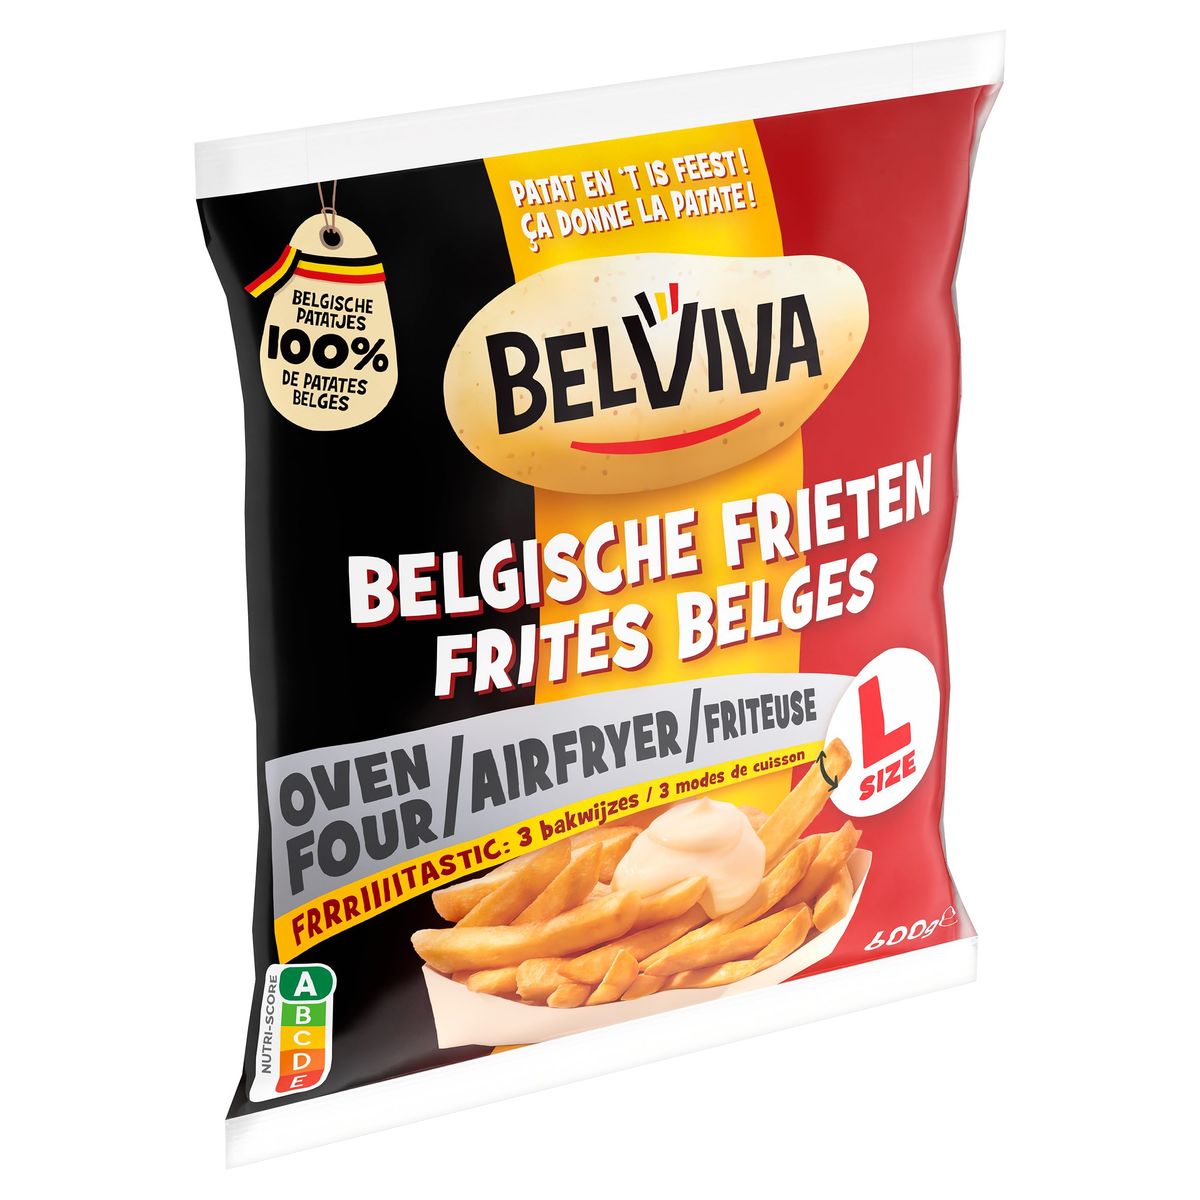 Belviva Belgische Frieten Oven Airfryer Friteuse L Size 600 g